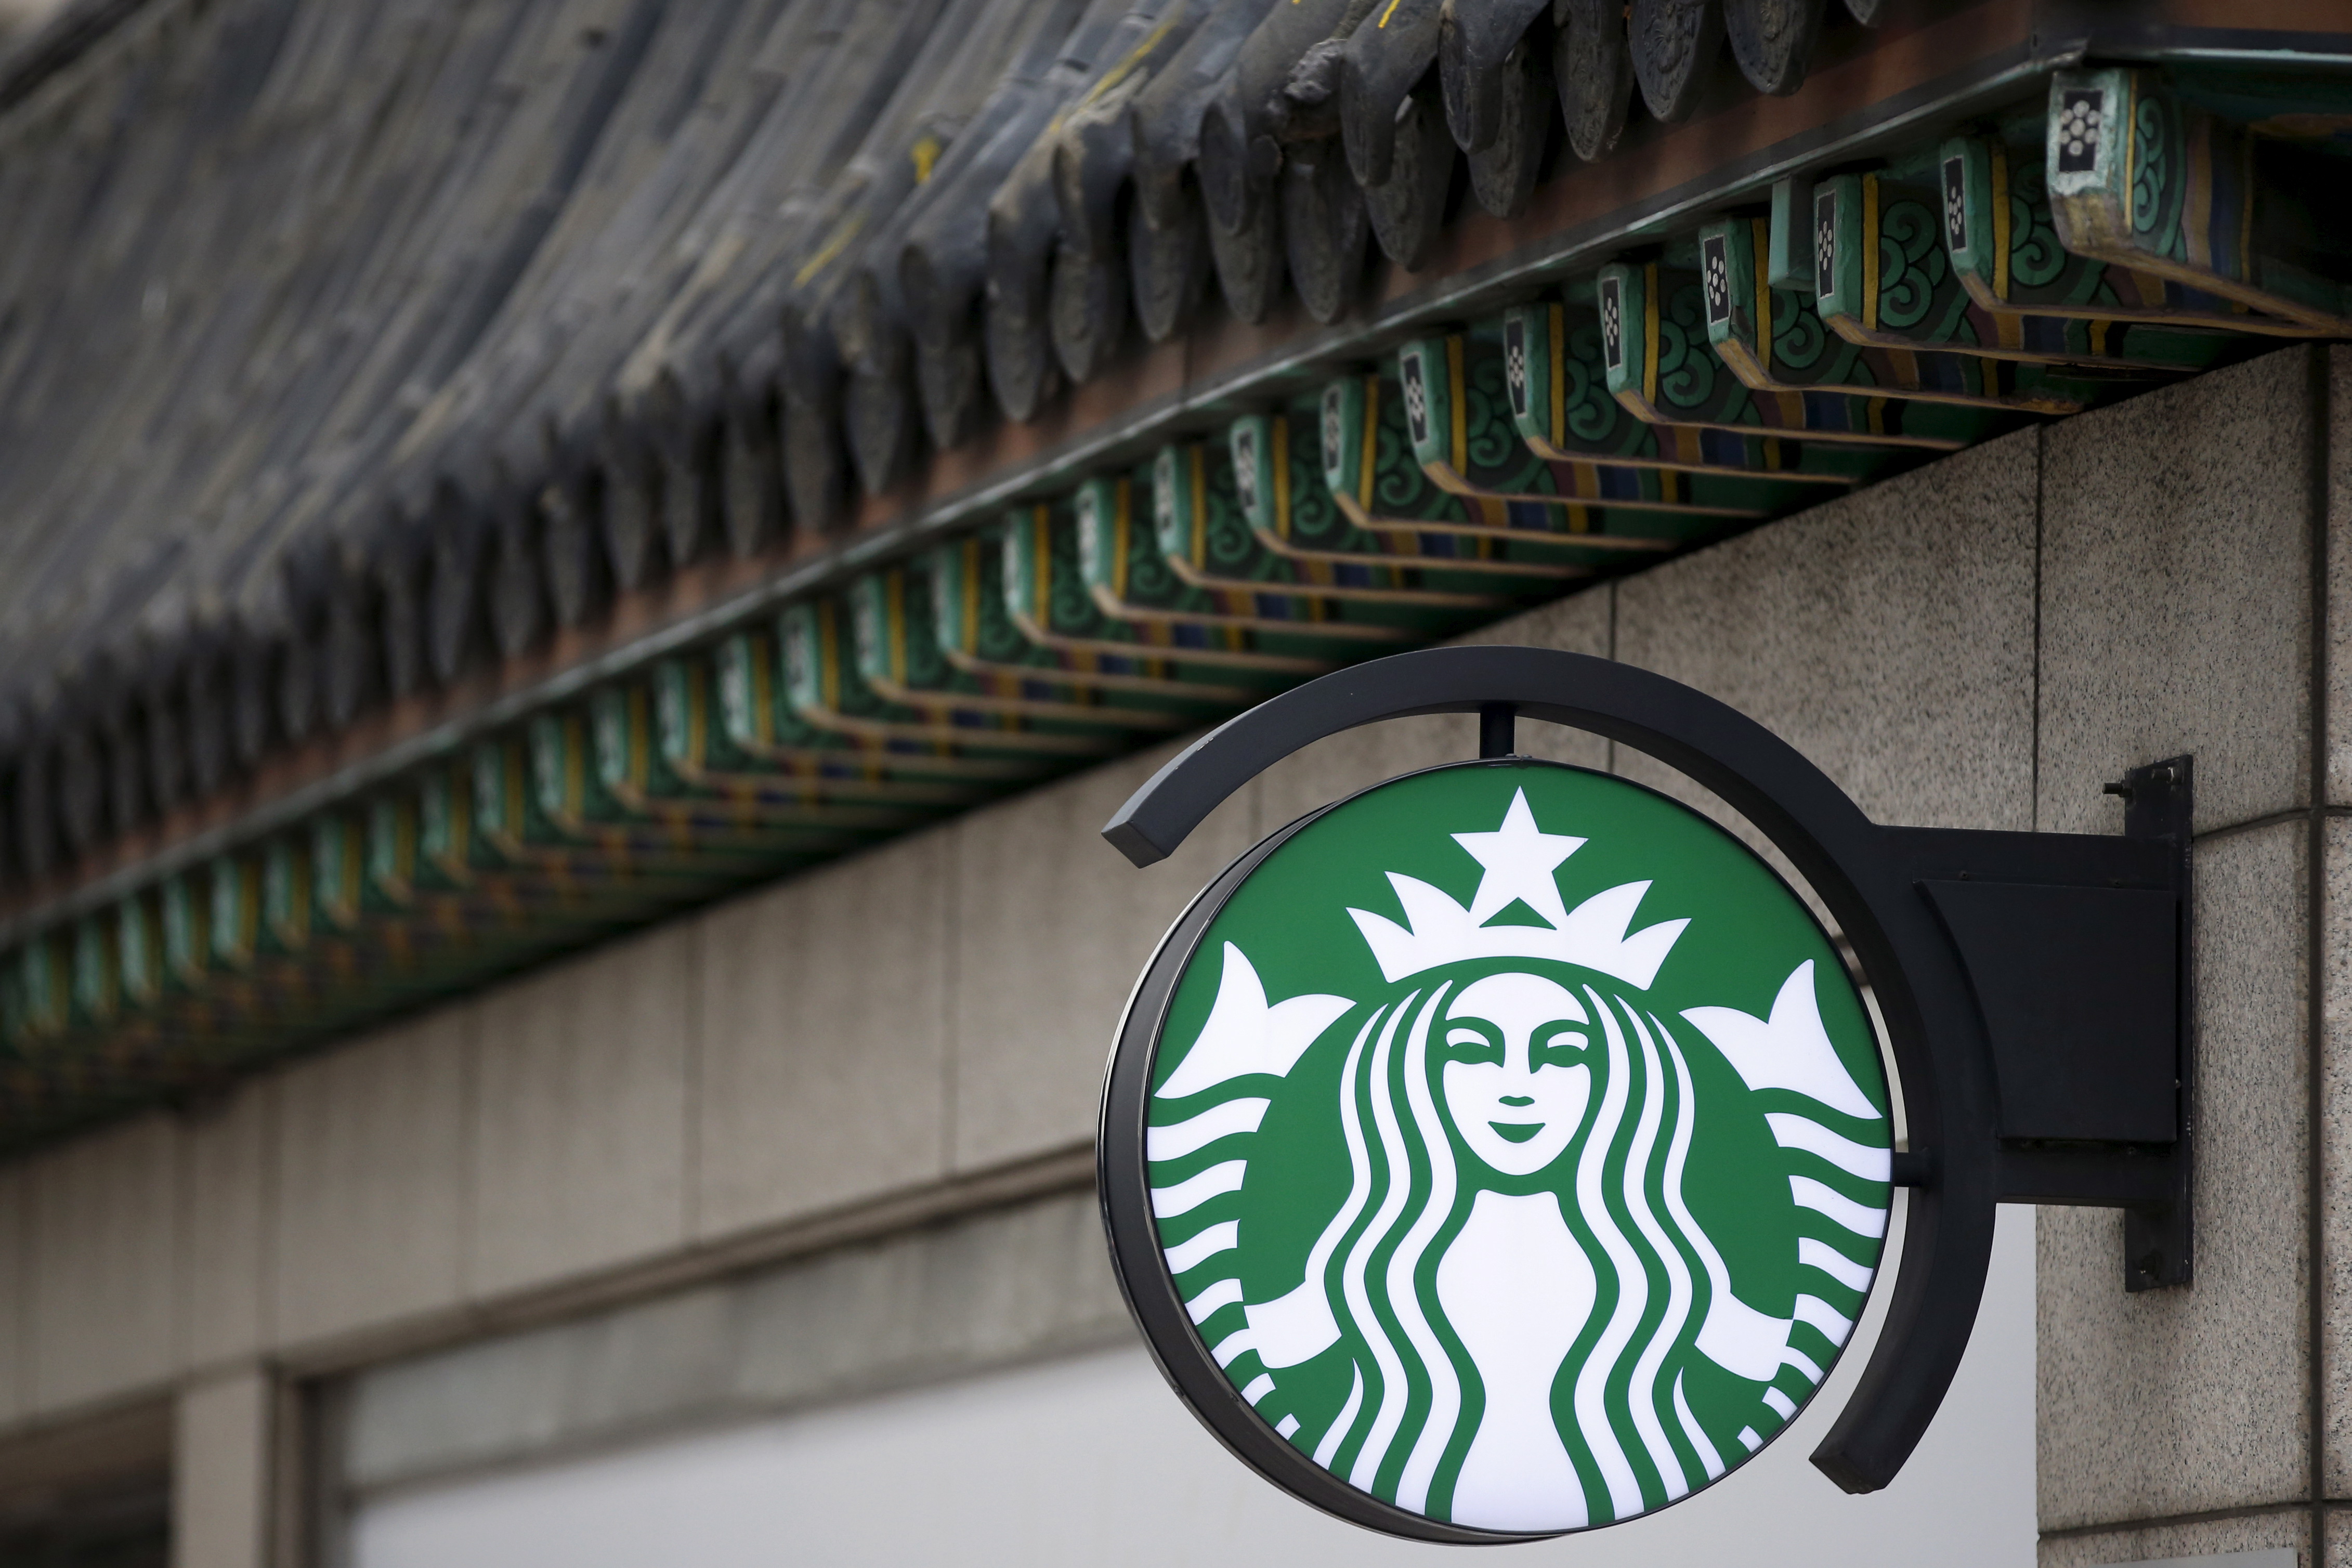 A Starbucks logo is seen at a Starbucks coffee shop in Seoul